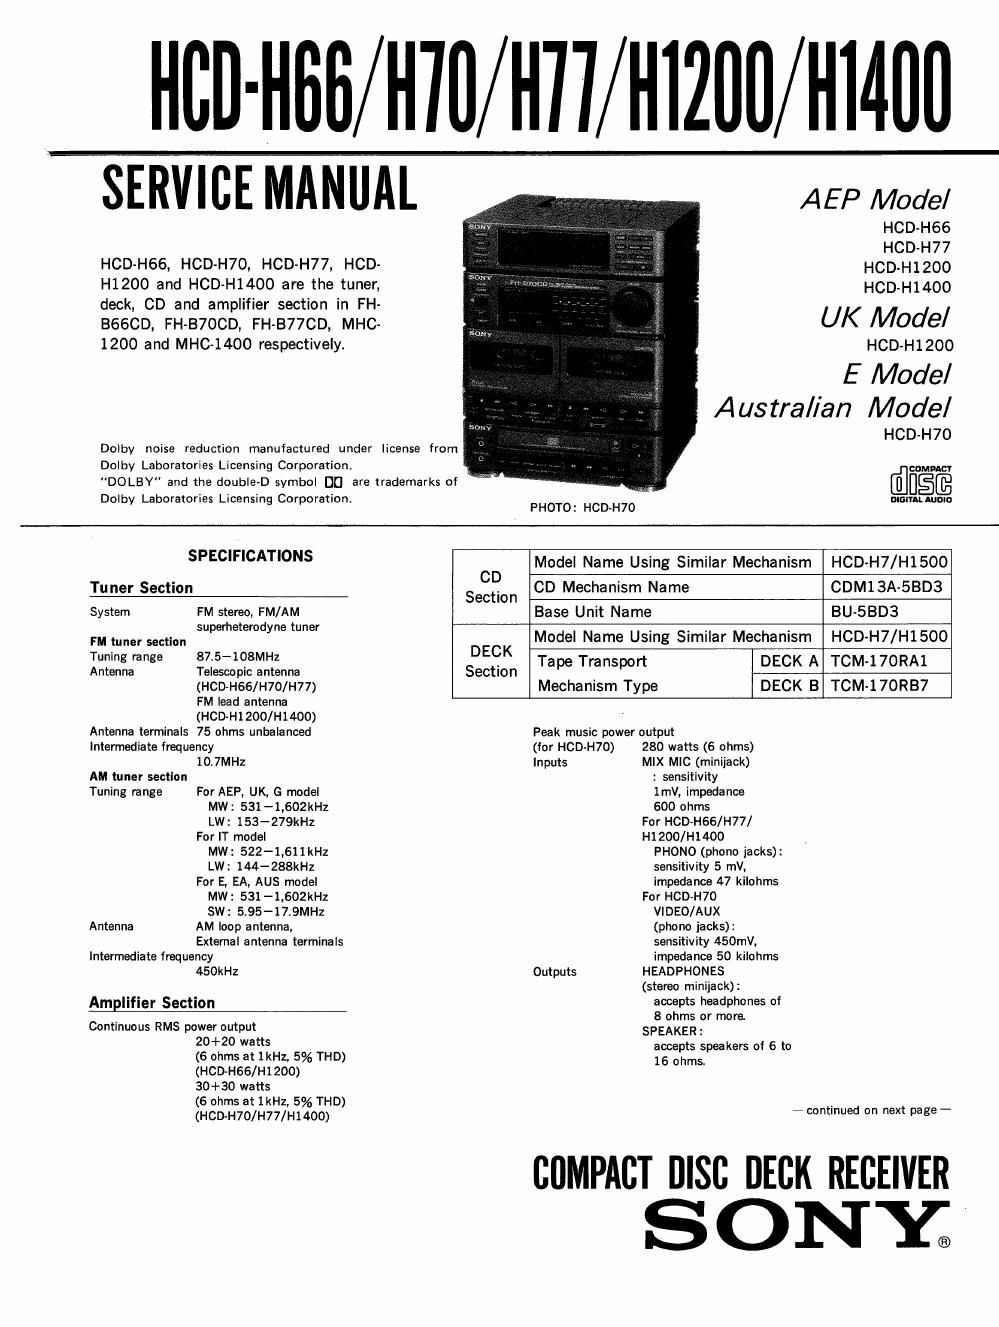 sony hcd h 1200 service manual